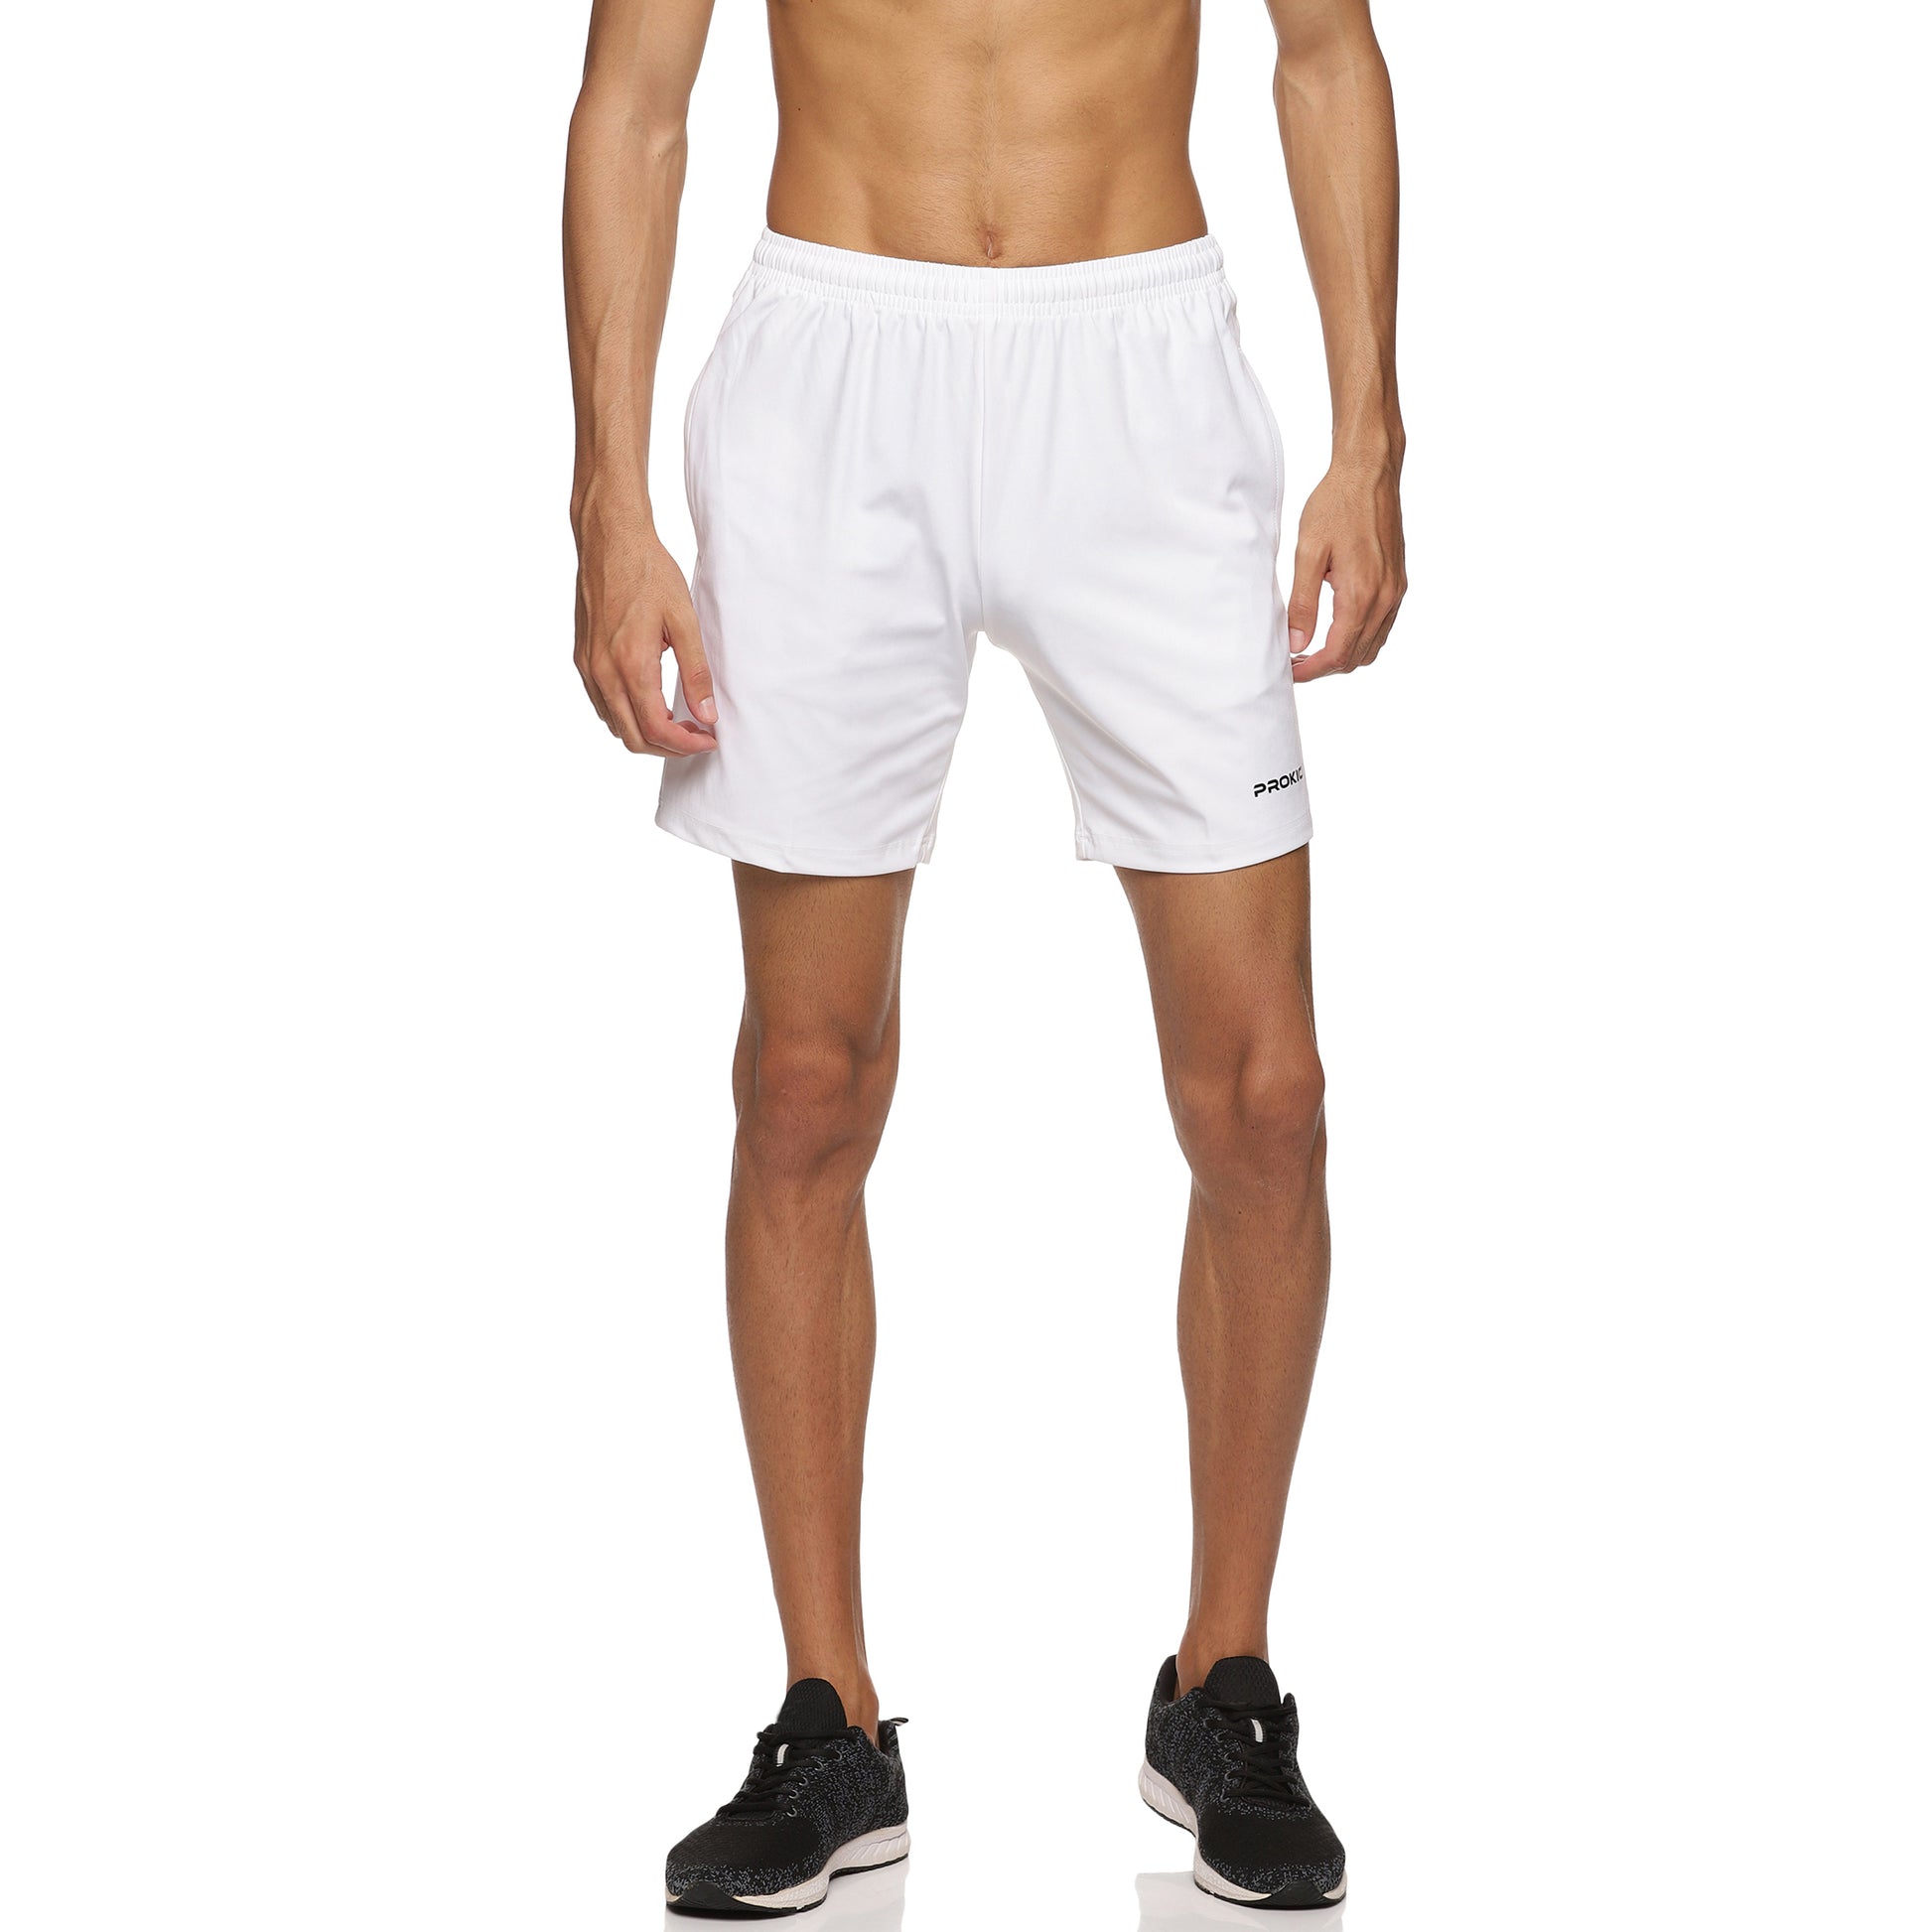 Prokick Lycra Sports Shorts for Men, White - Best Price online Prokicksports.com